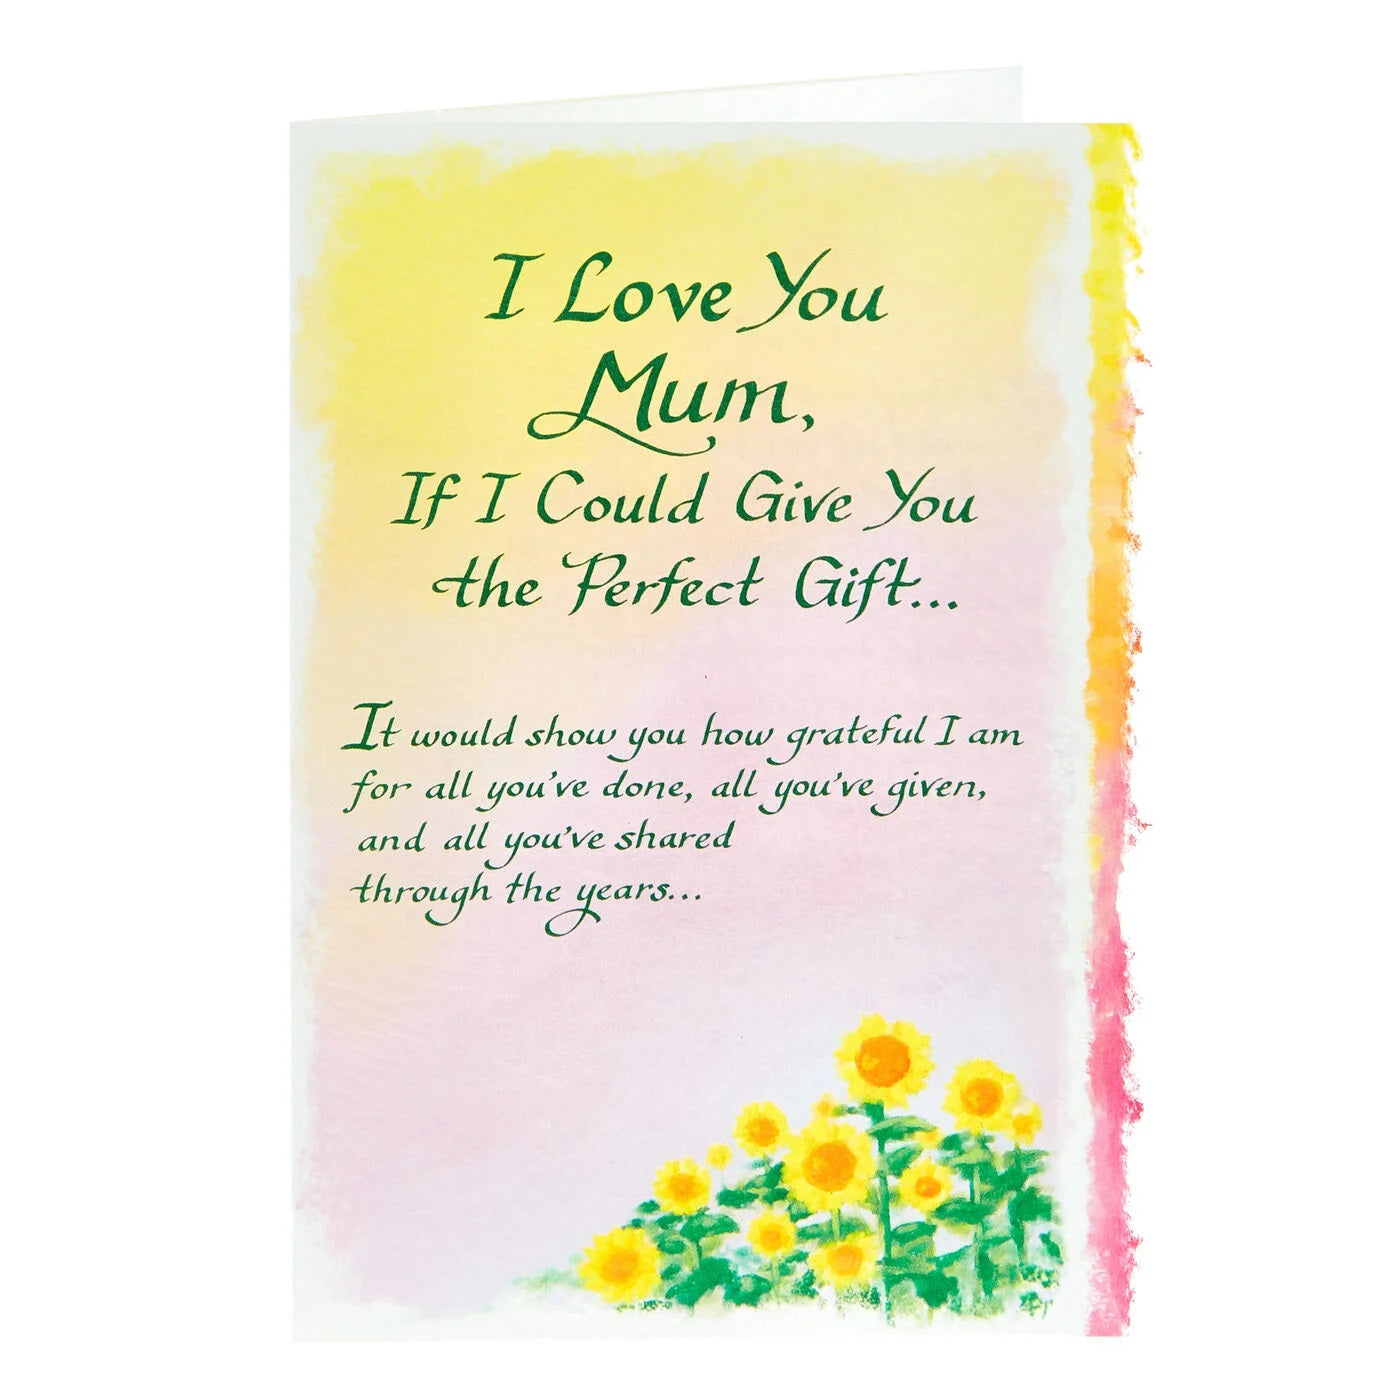 I Love You Mum Card - Blue Mountain Arts